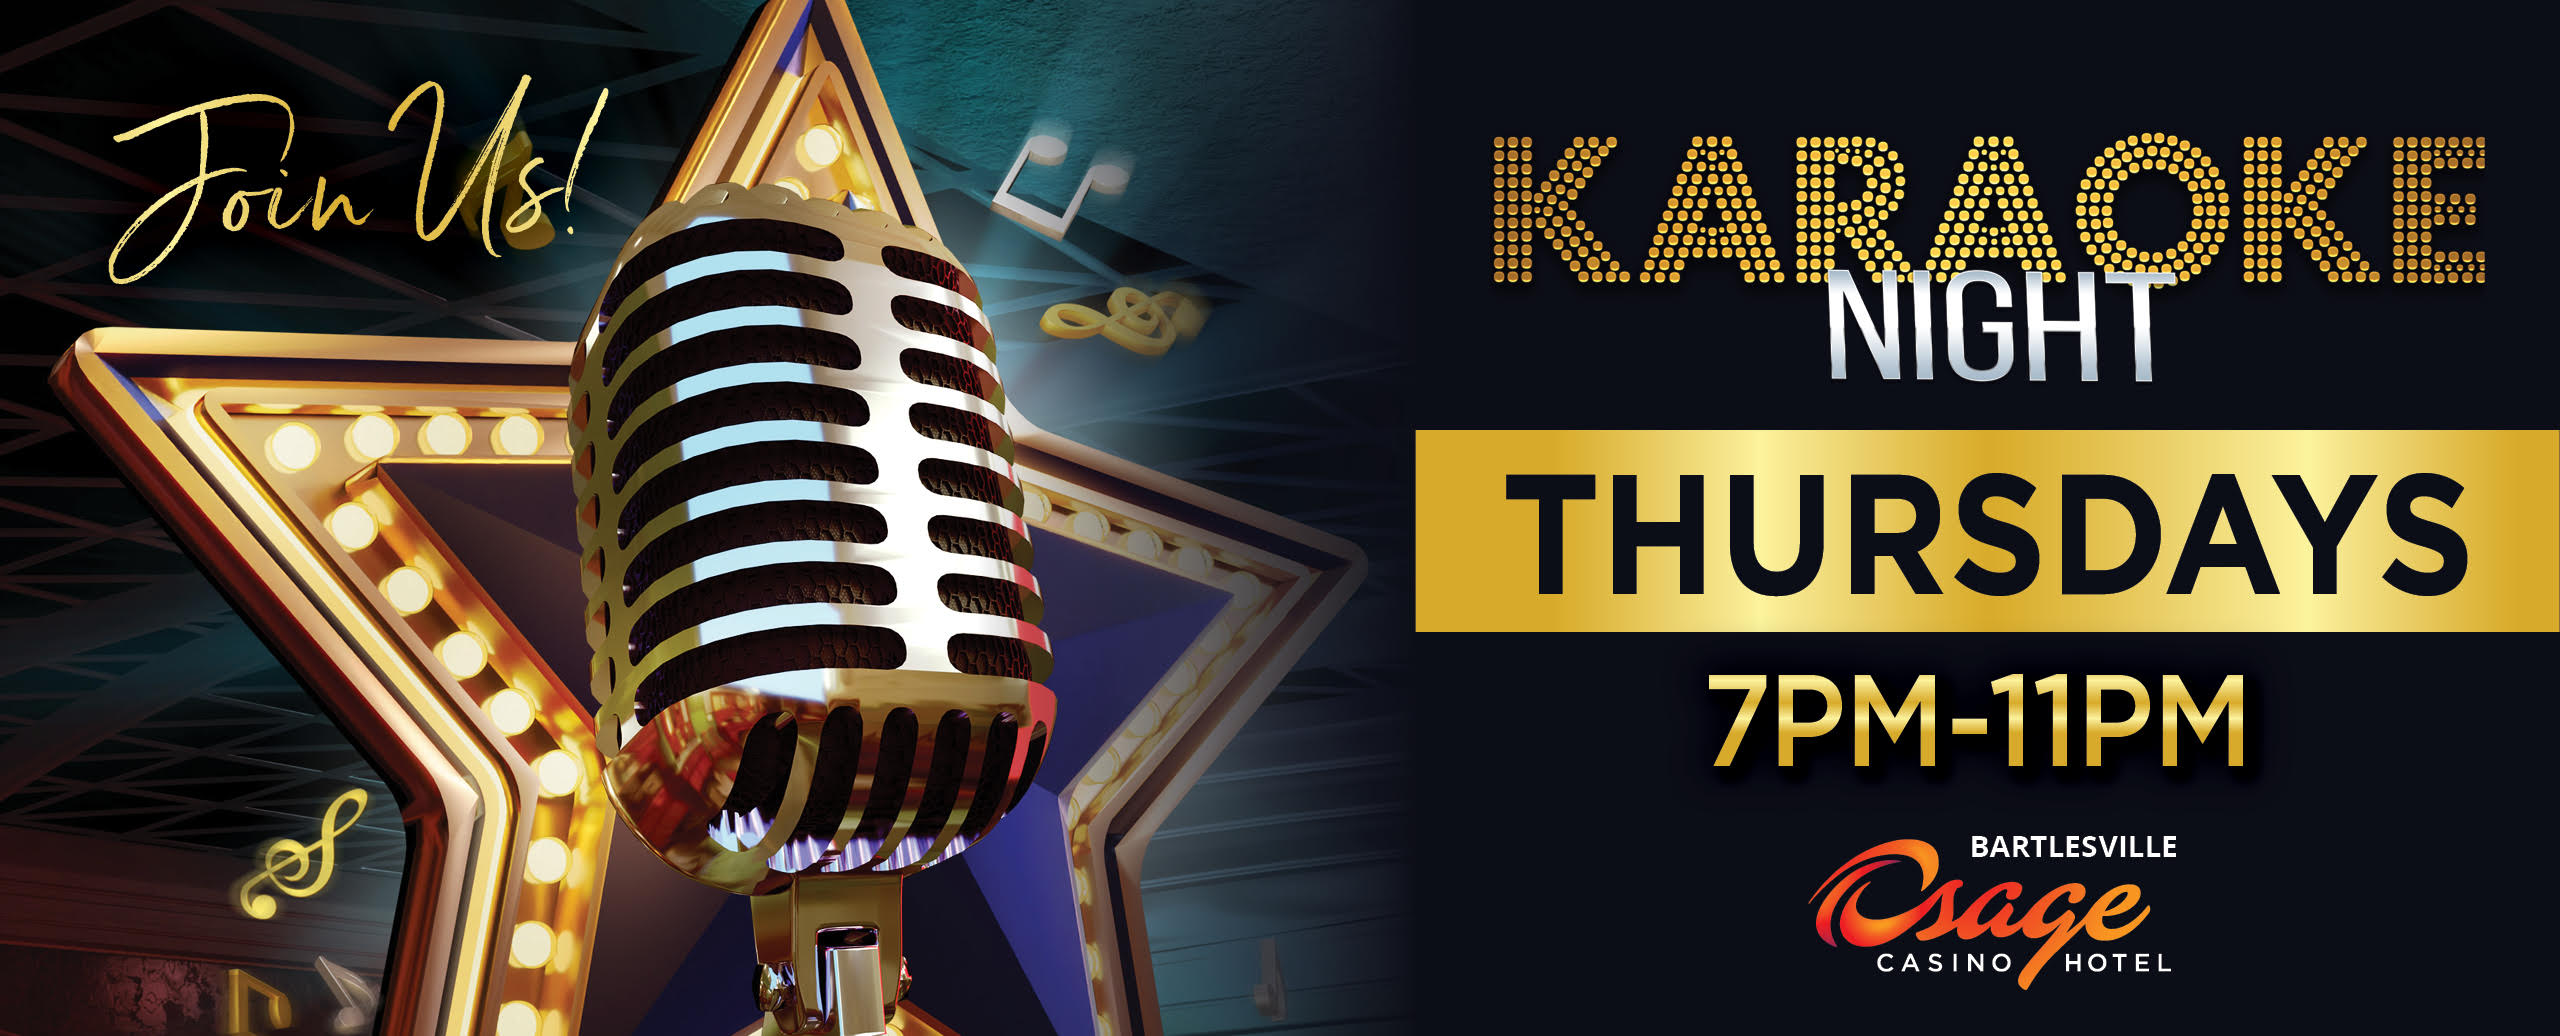 Join Us for Karaoke Fridays 7 pm - 11 pm | Osage Casino Hotel